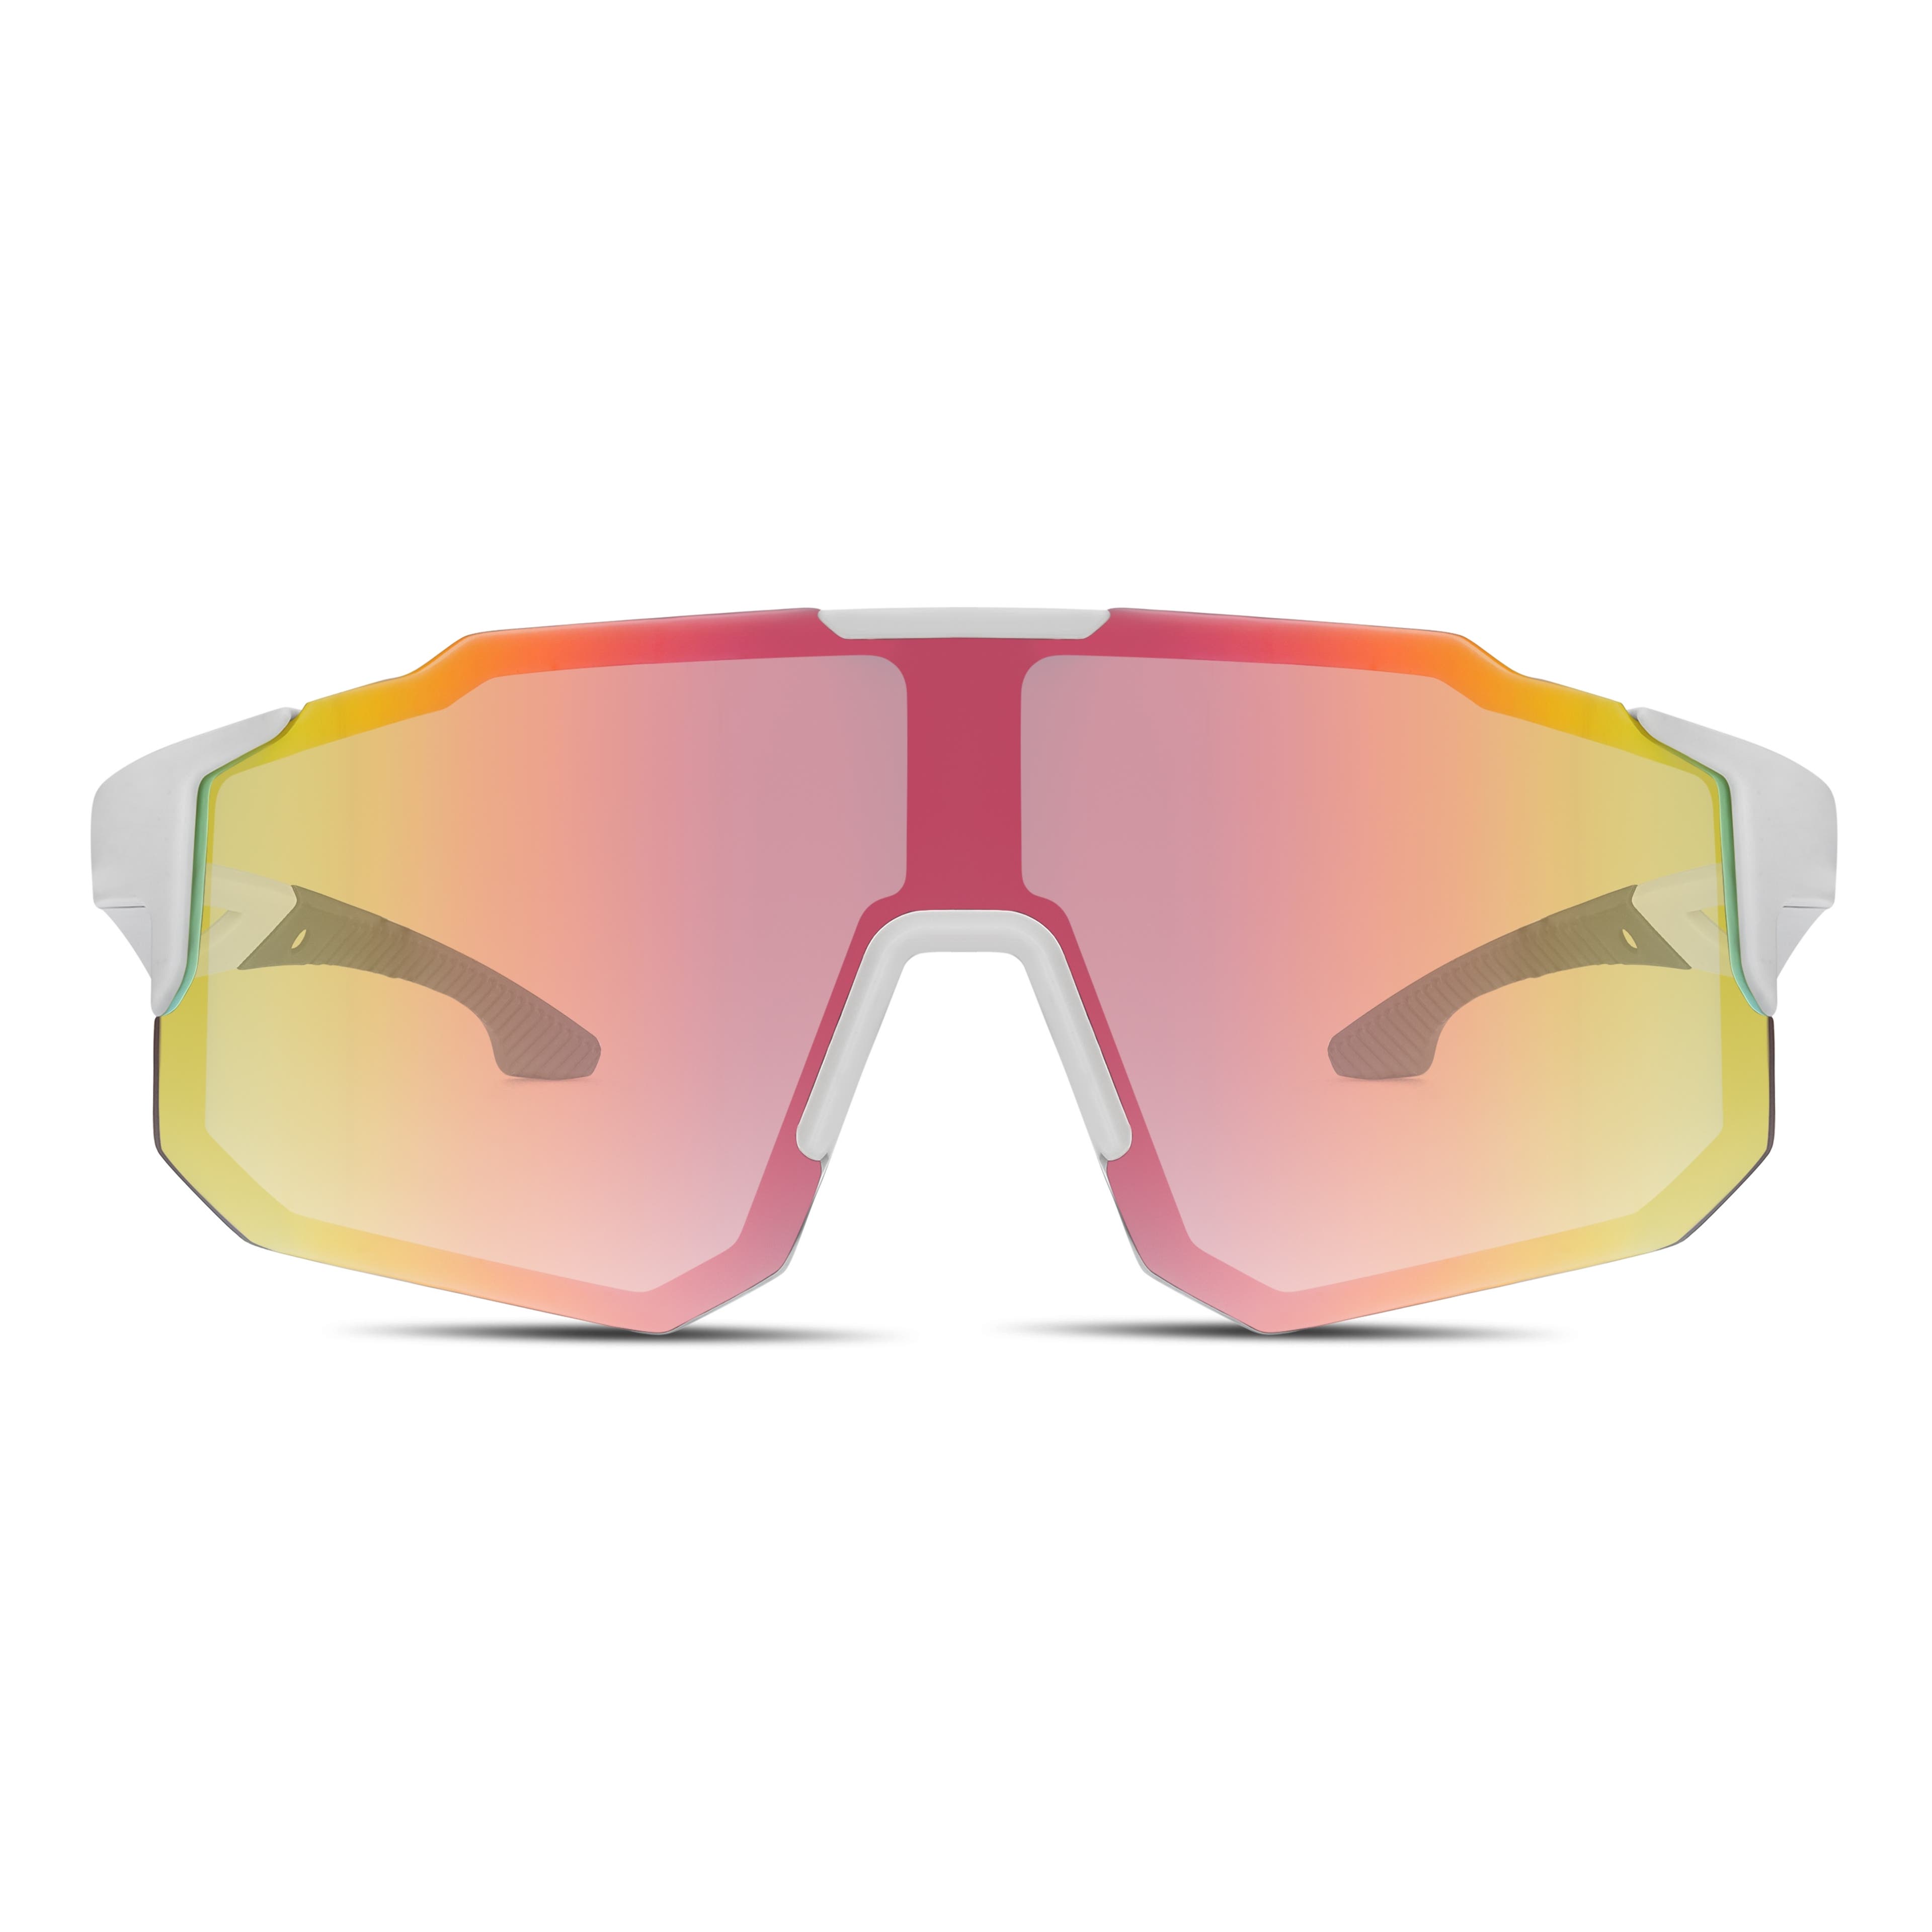 Røde og Hvite Omsluttende Sportsbriller